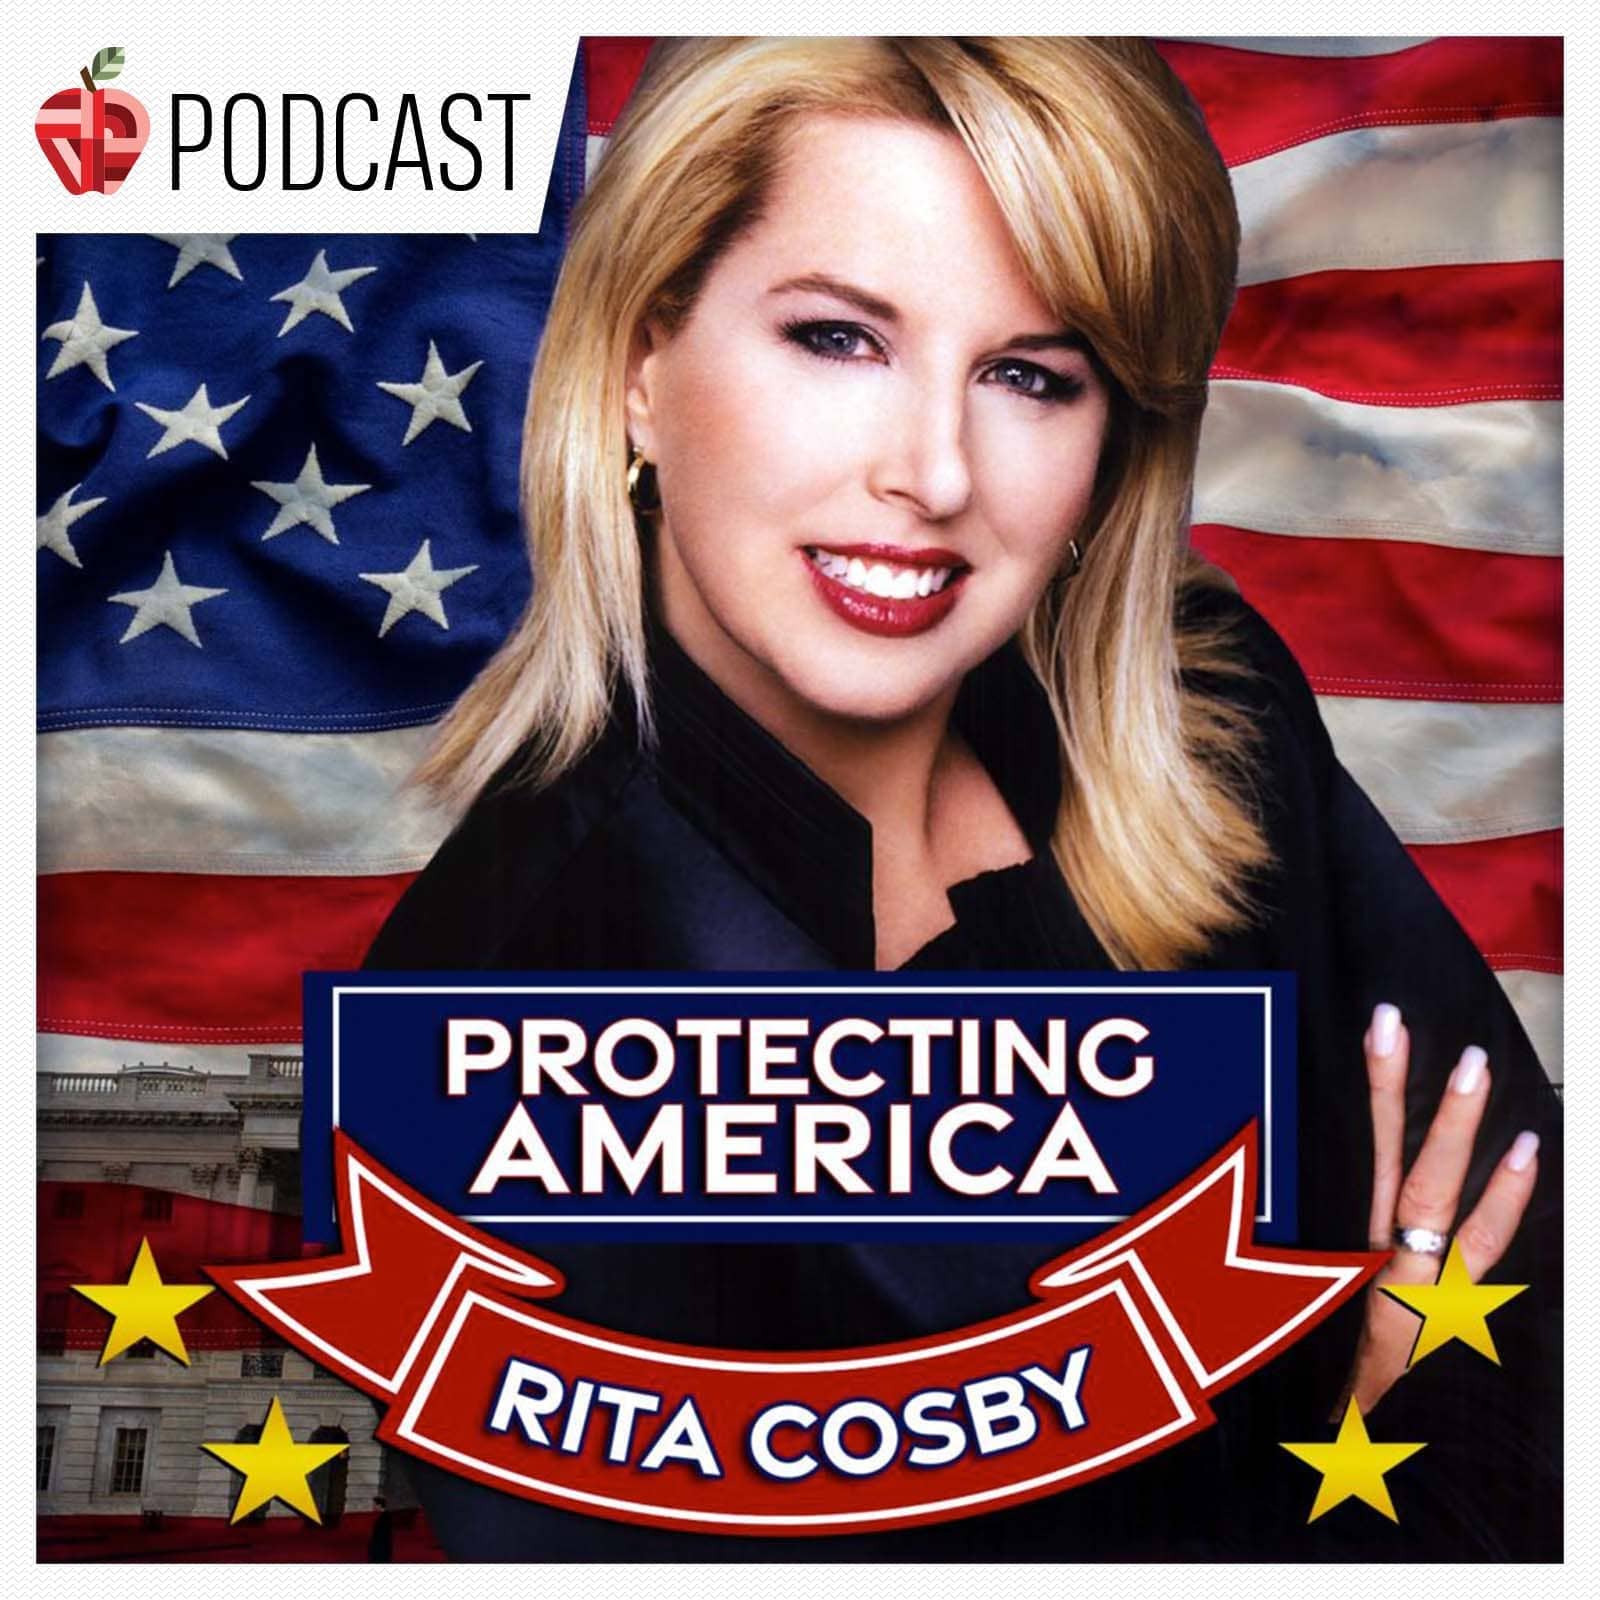 rita-cosby-protecting-america-correct-podcast-new-logo-21